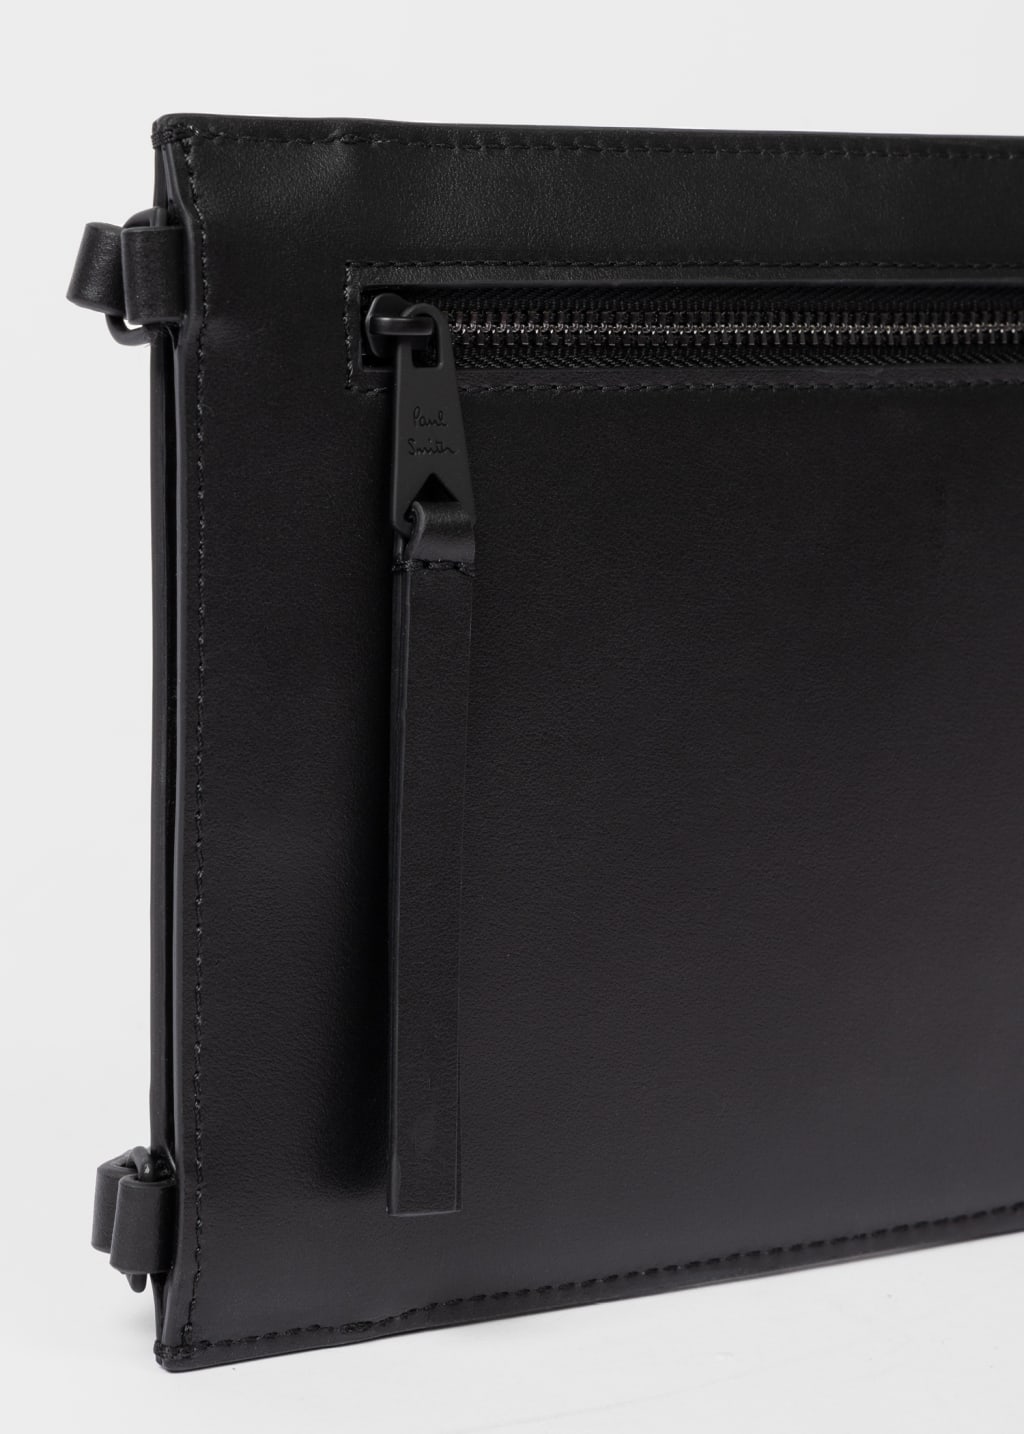 Detail View - Black Leather 'Signature Stripe Block' Cross-Body Bag Paul Smith